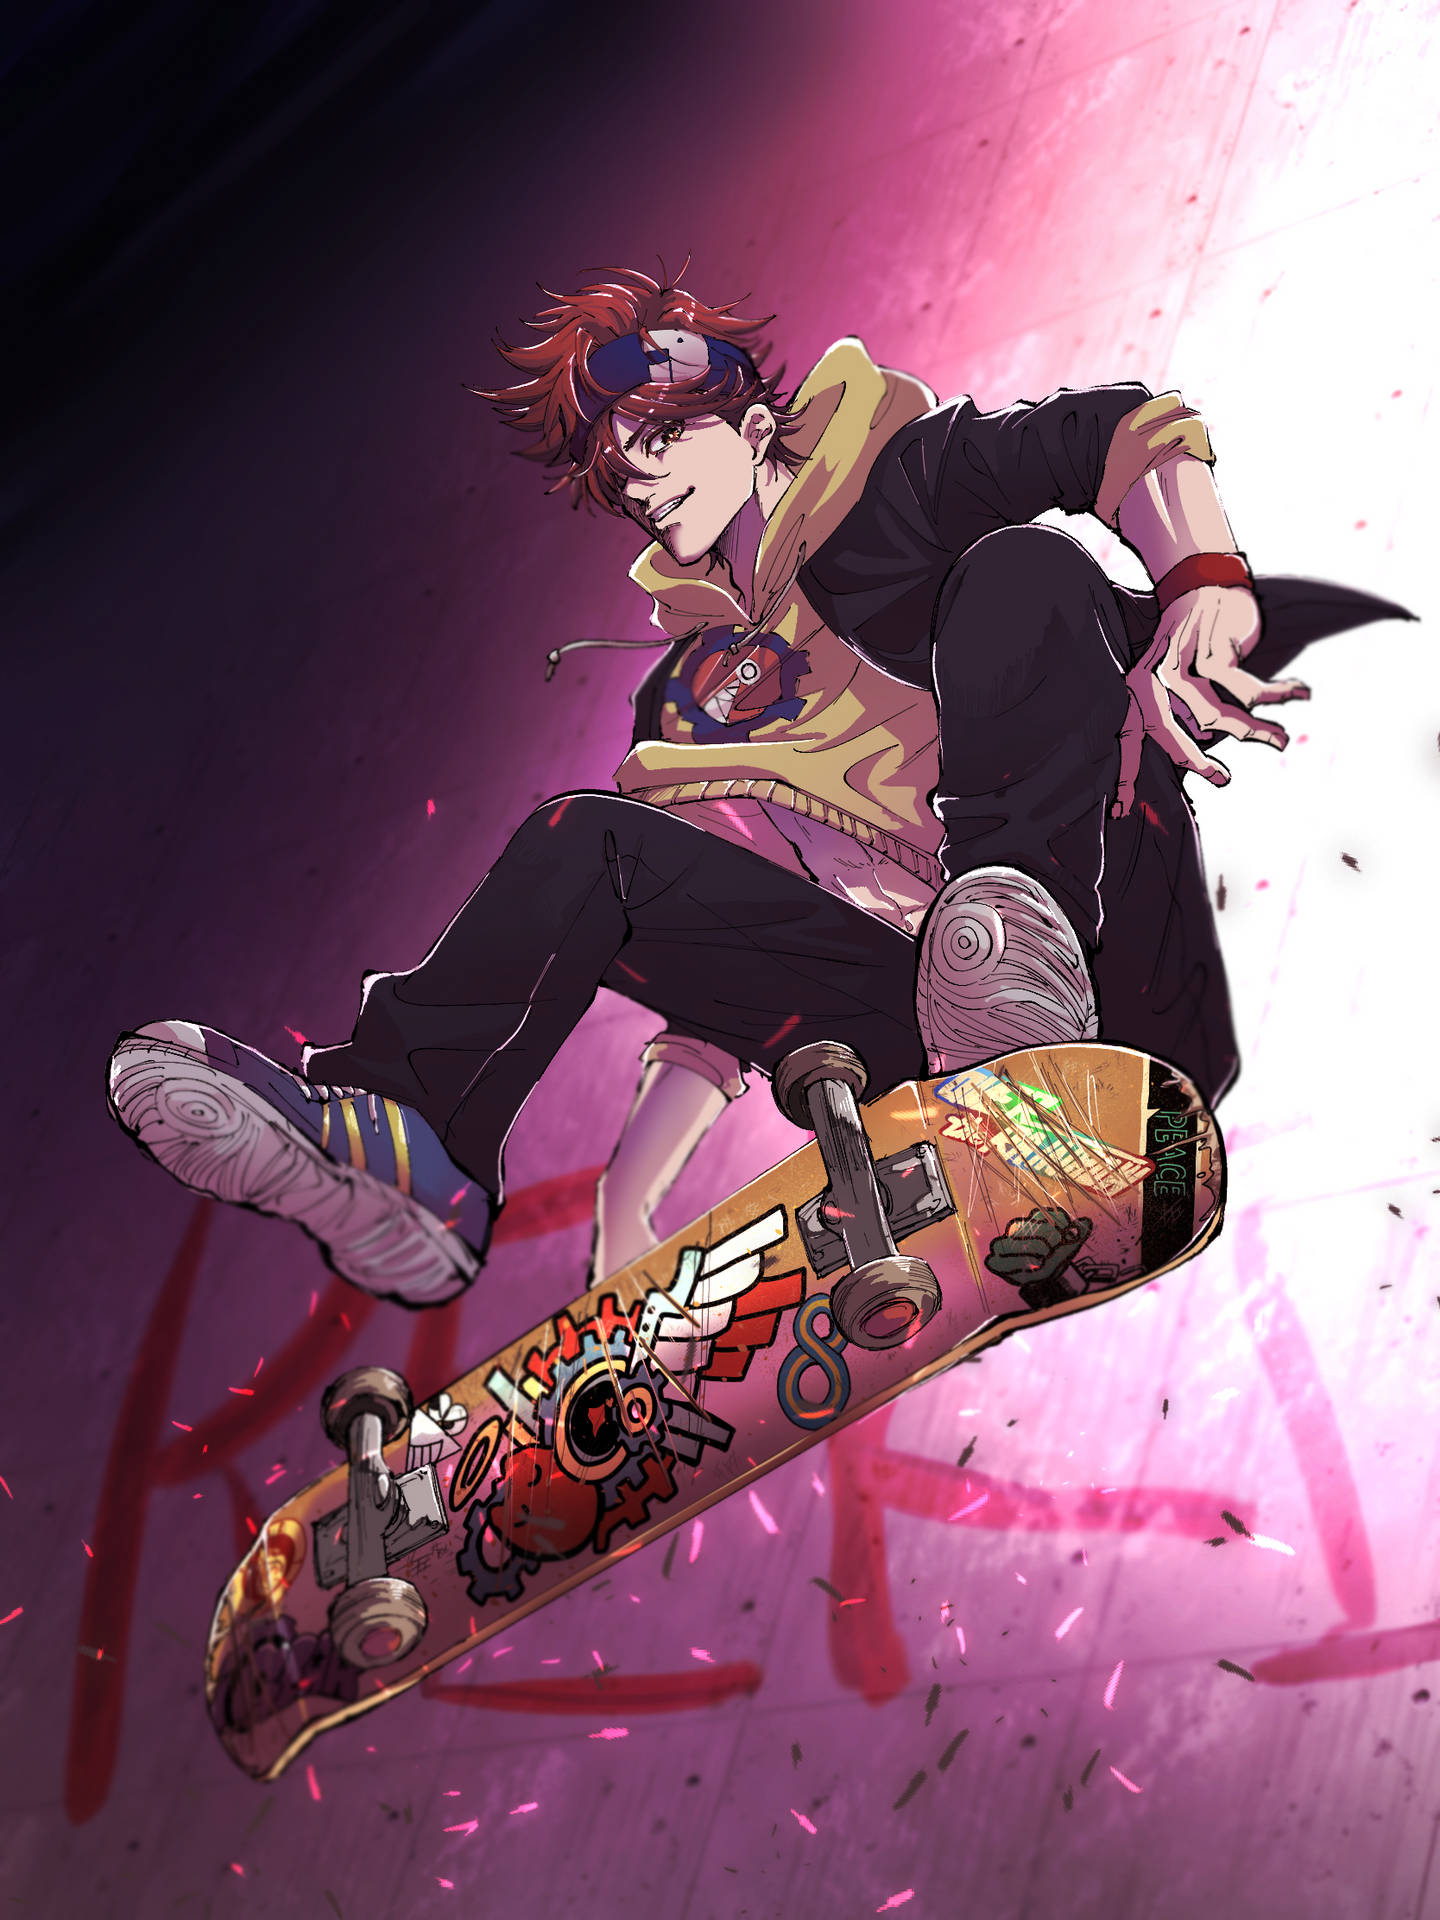 Punisher Anime Skateboard – Punisher Skateboards-demhanvico.com.vn